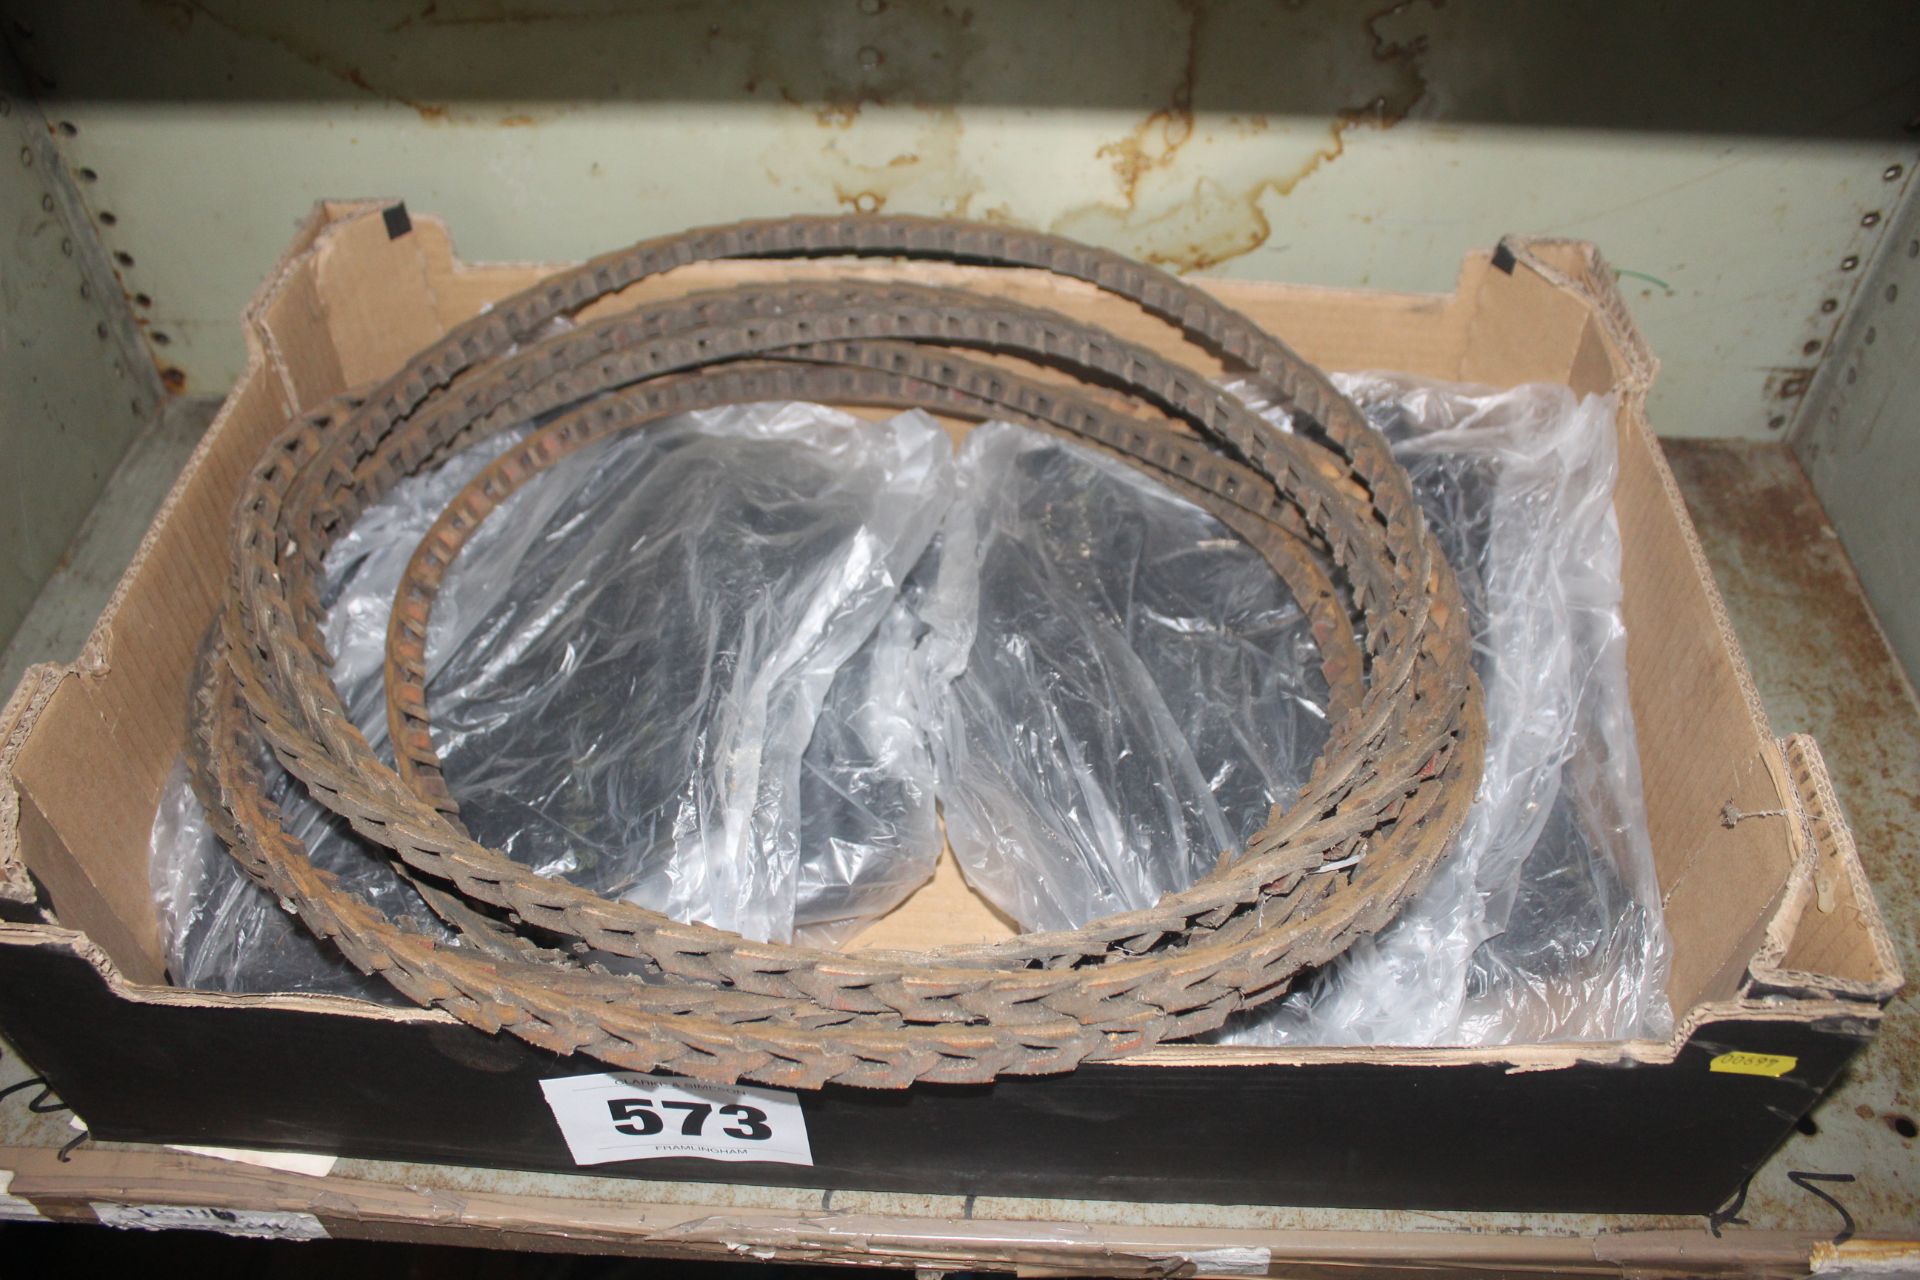 4x unused 750-16 inner tubes and vintage belts.